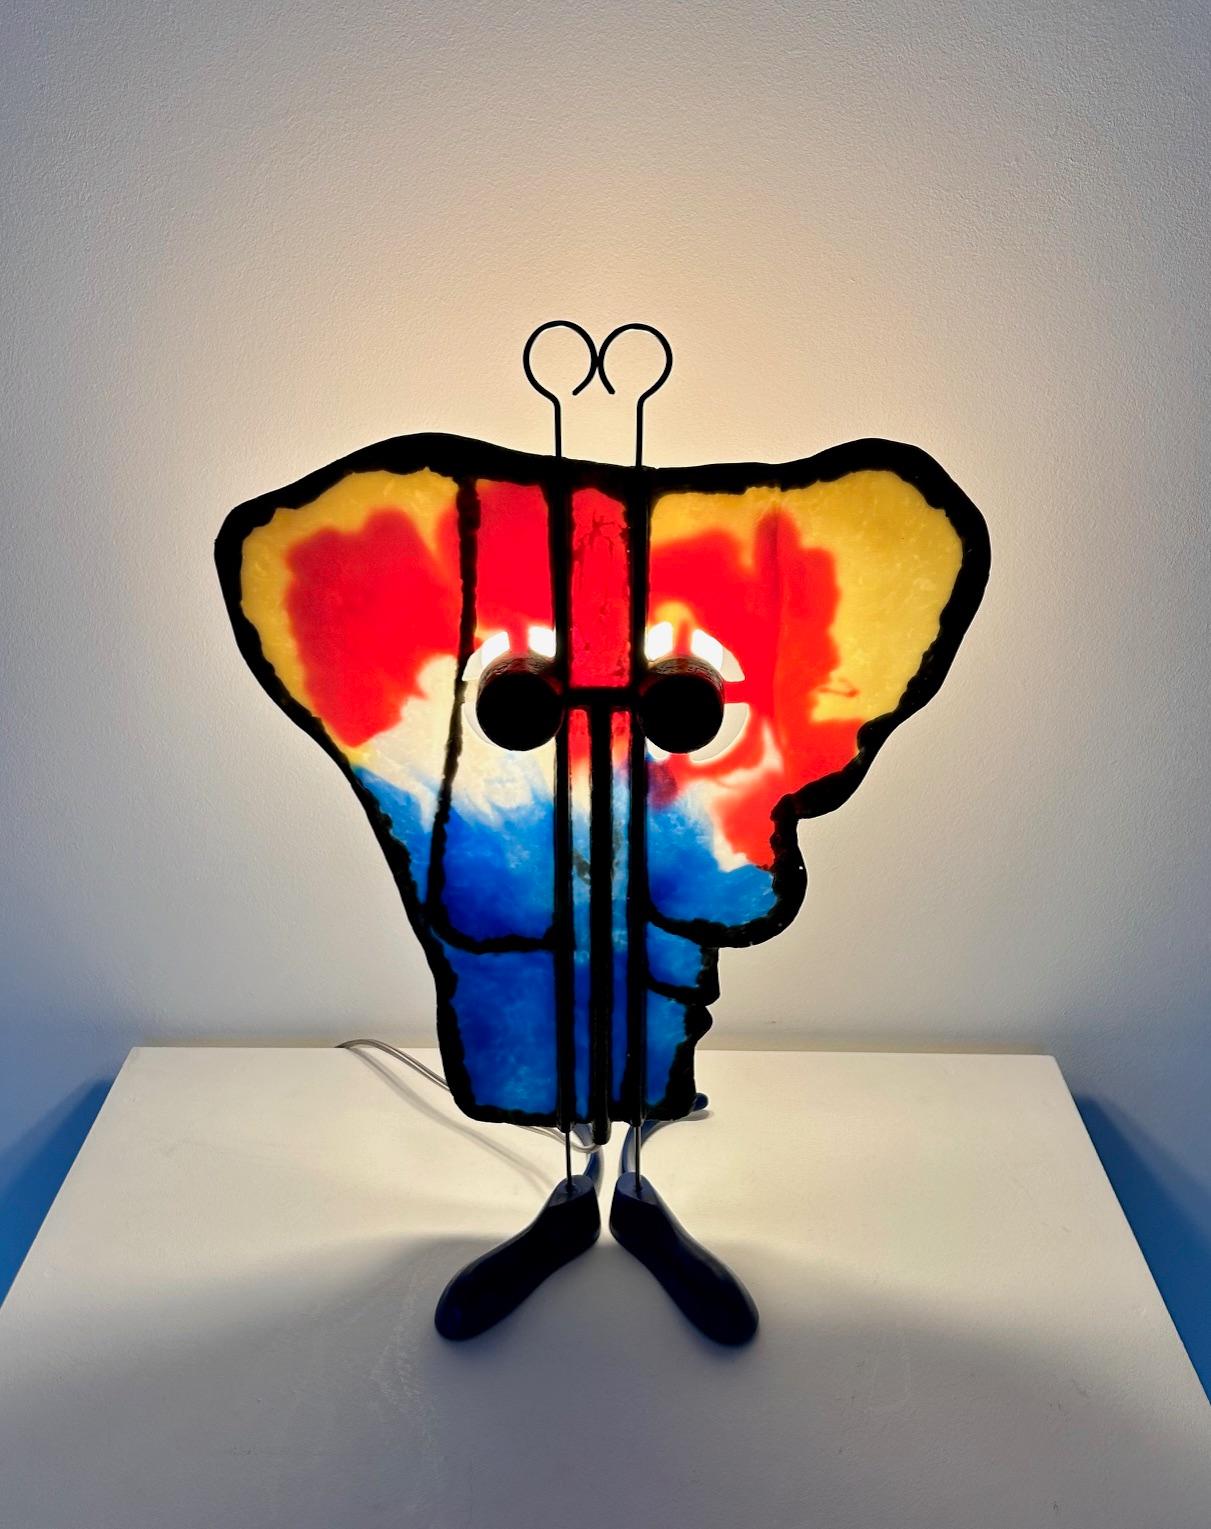 Late 20th Century Friend lamp by Gaetano Pesce for Meritalia, 1995